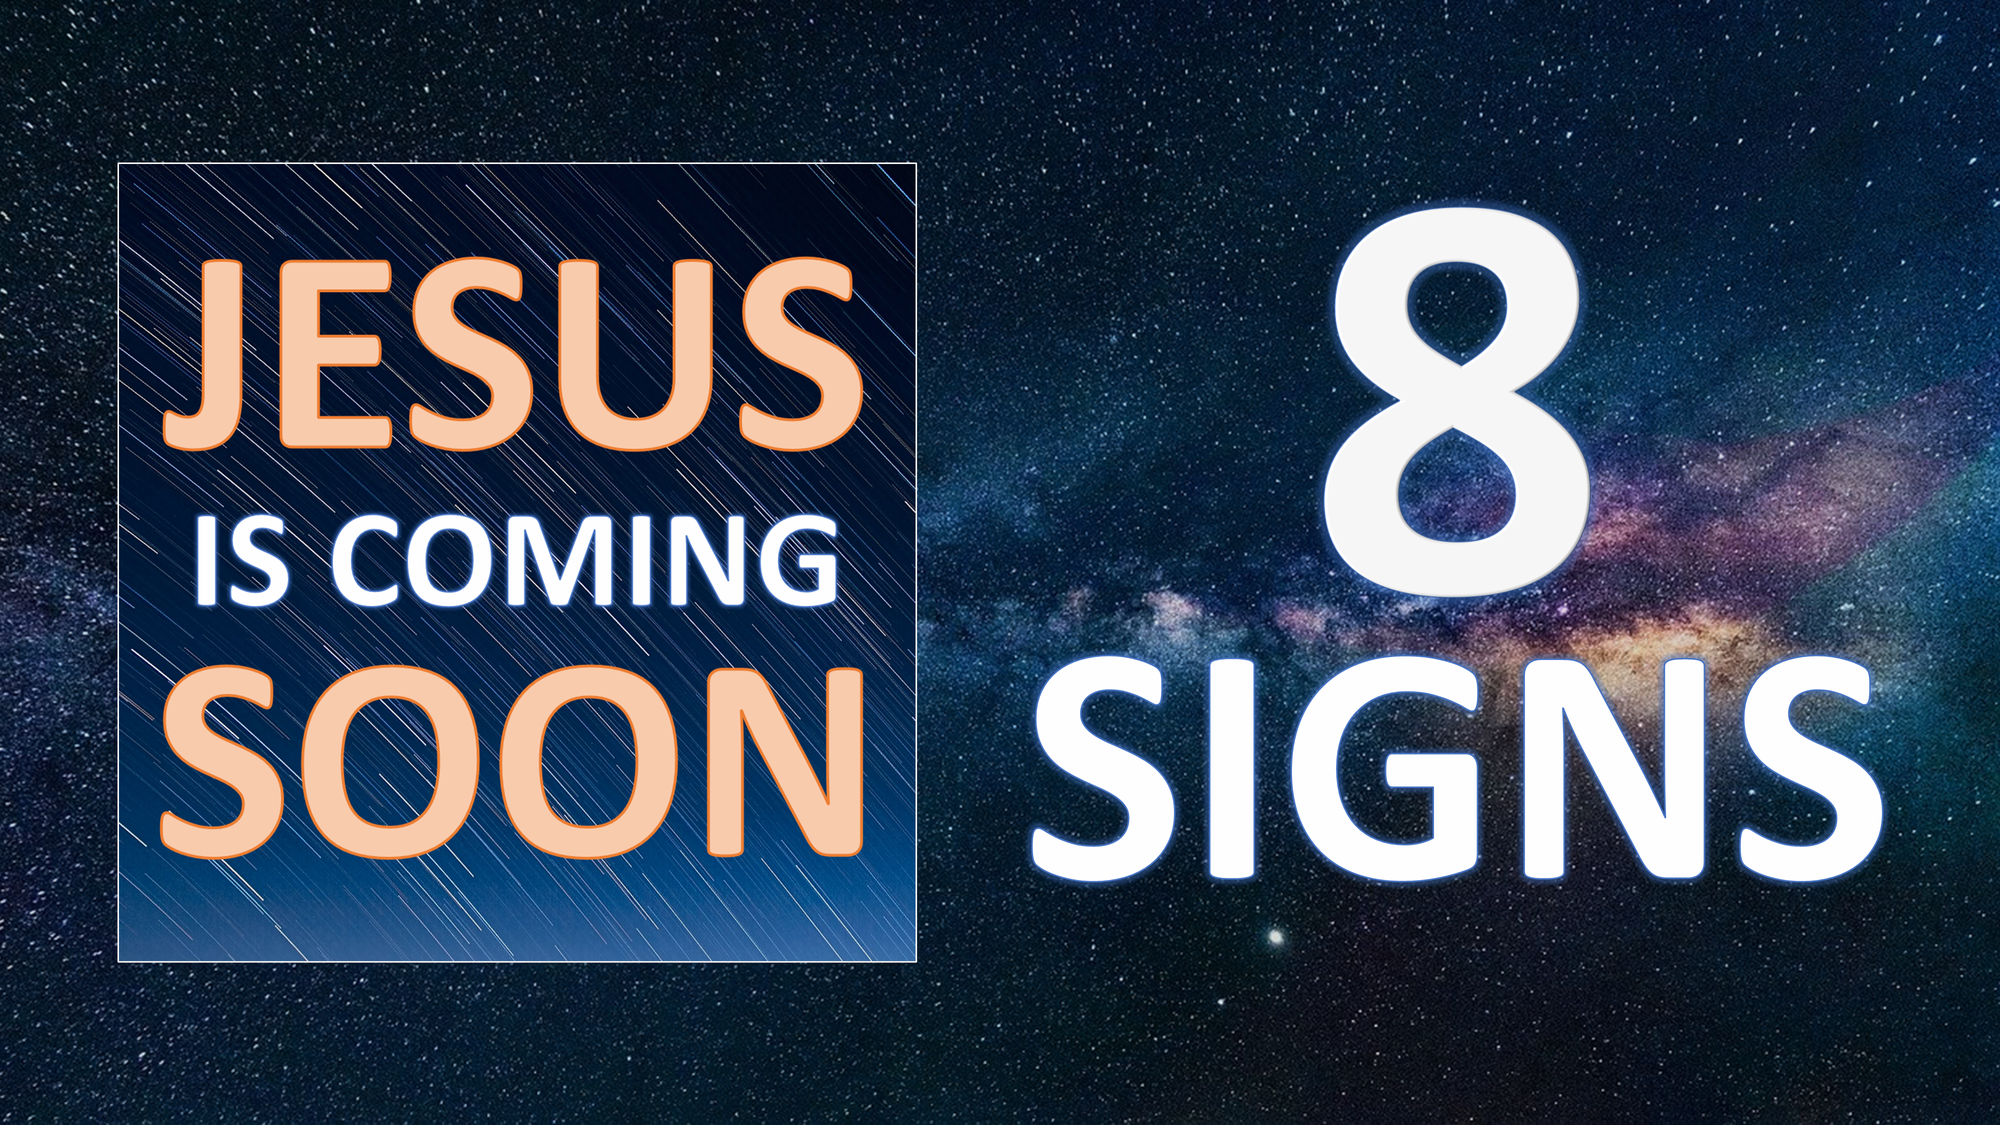 8 Signs that Jesus is Coming Soon